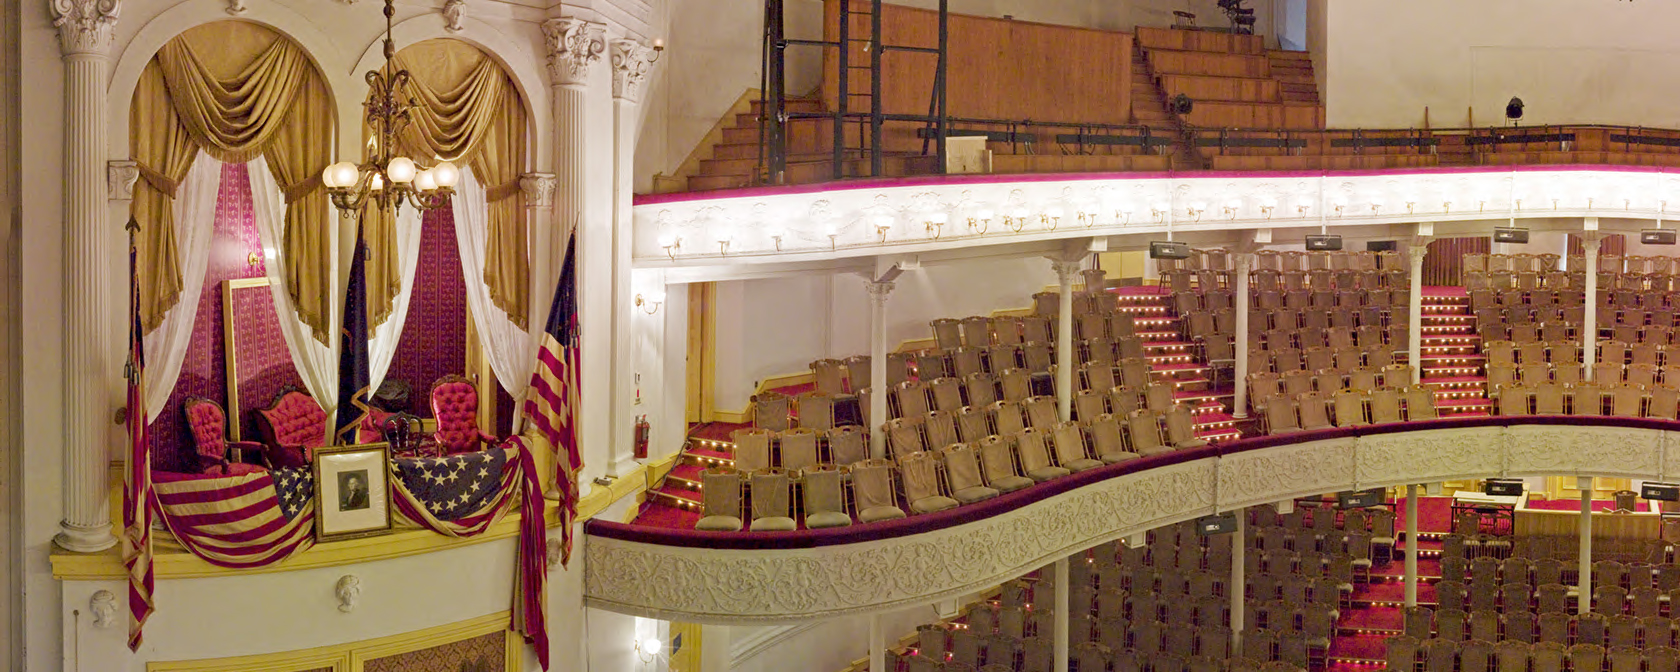 Vista panoramica del teatro Ford